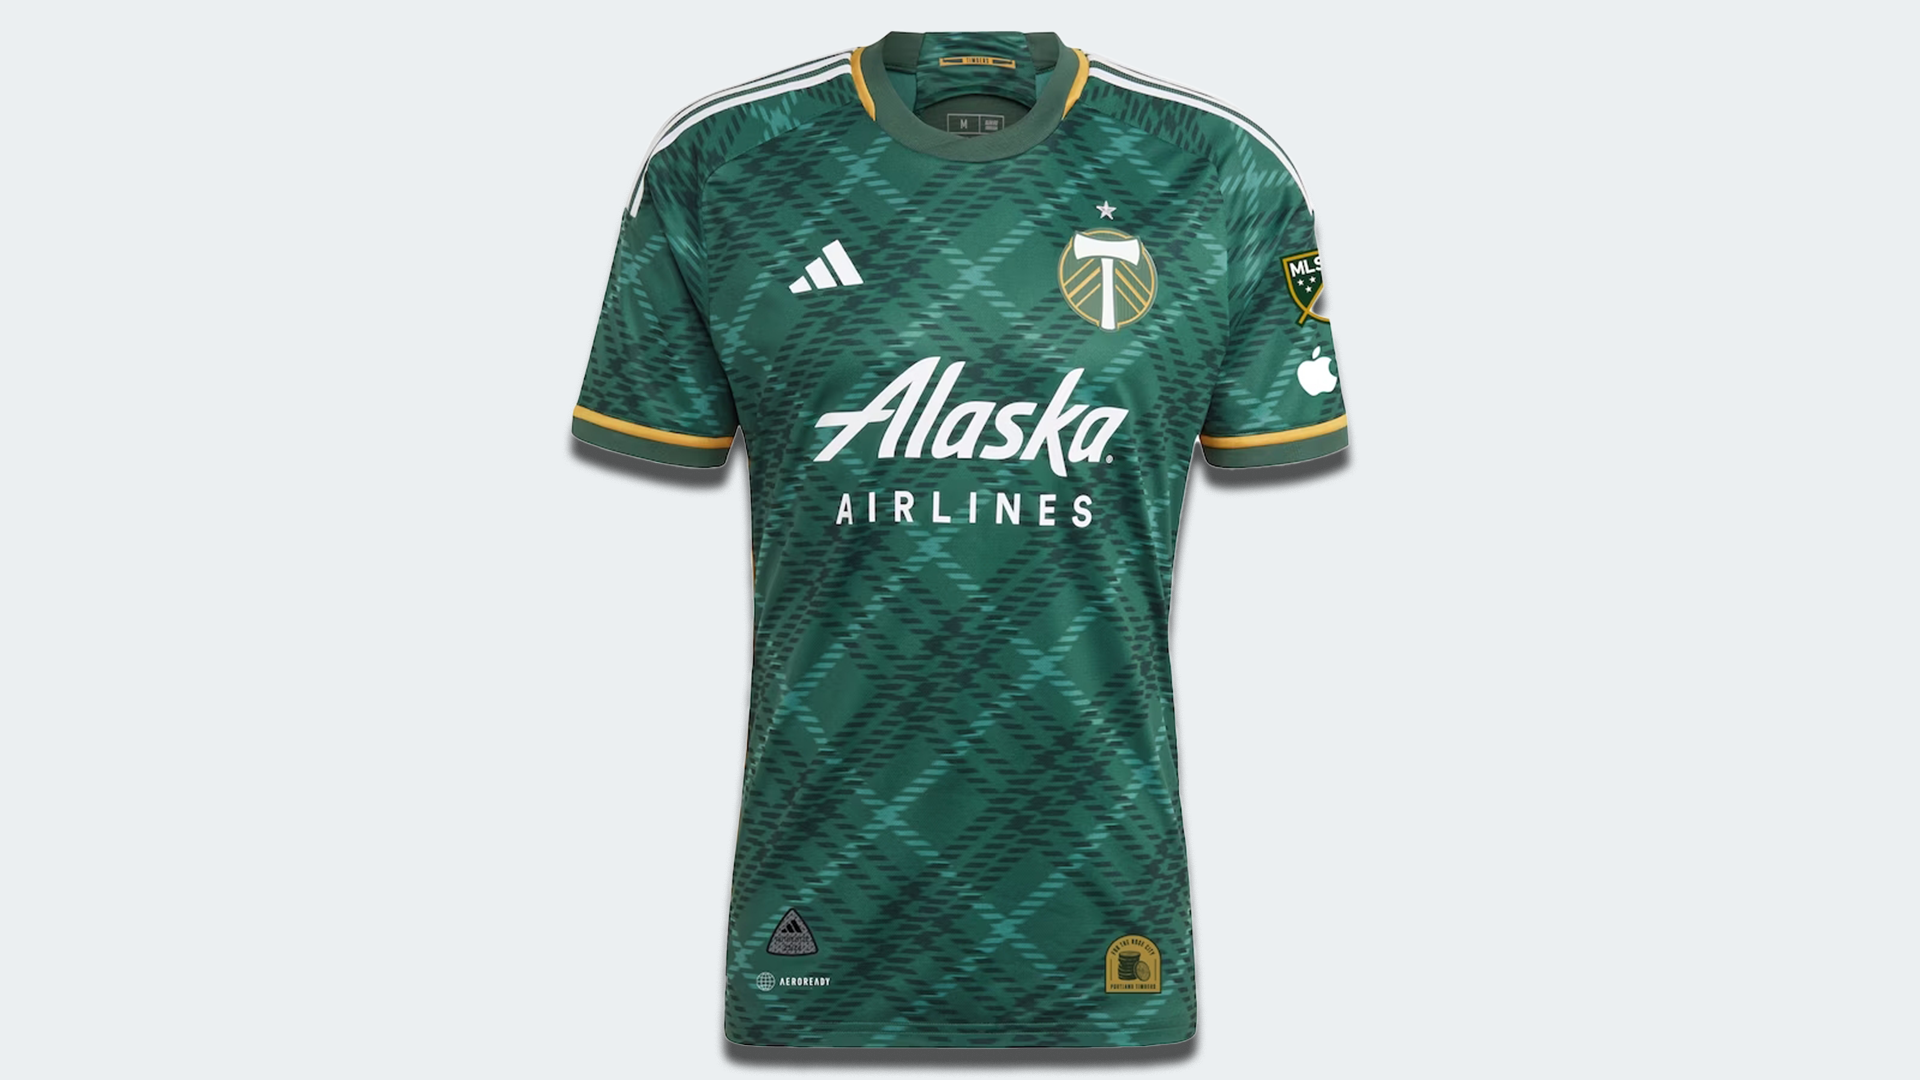 MLS kits: Nashville SC reveals 2022 jersey. Here's where to buy